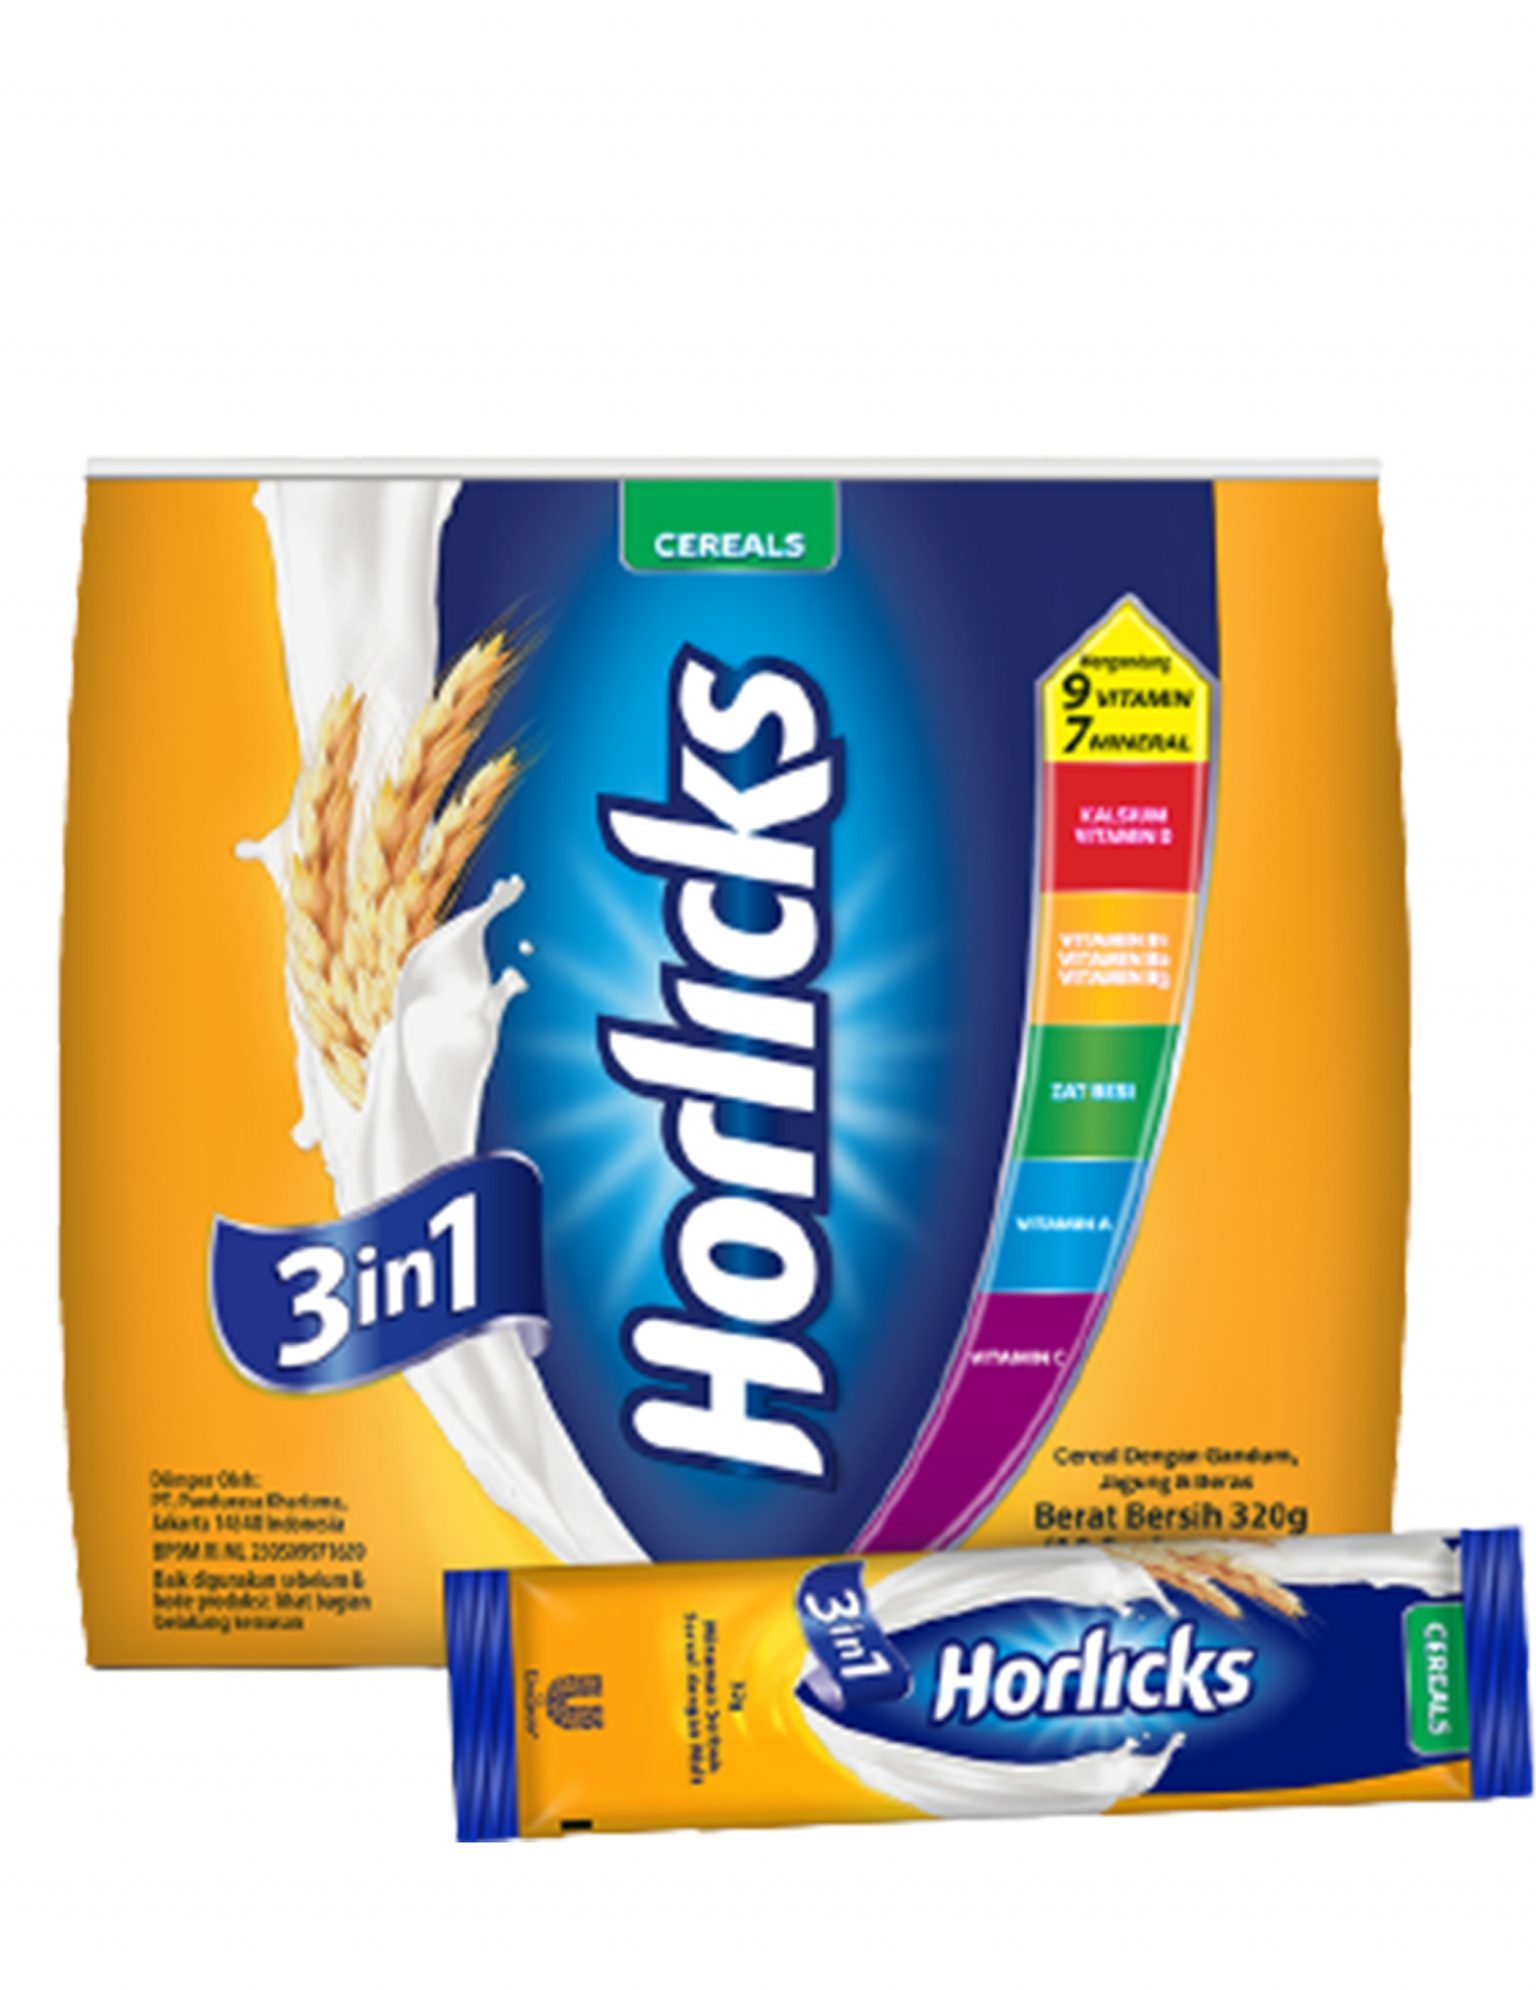 Horlicks Cereal 3 in 1 320g main image